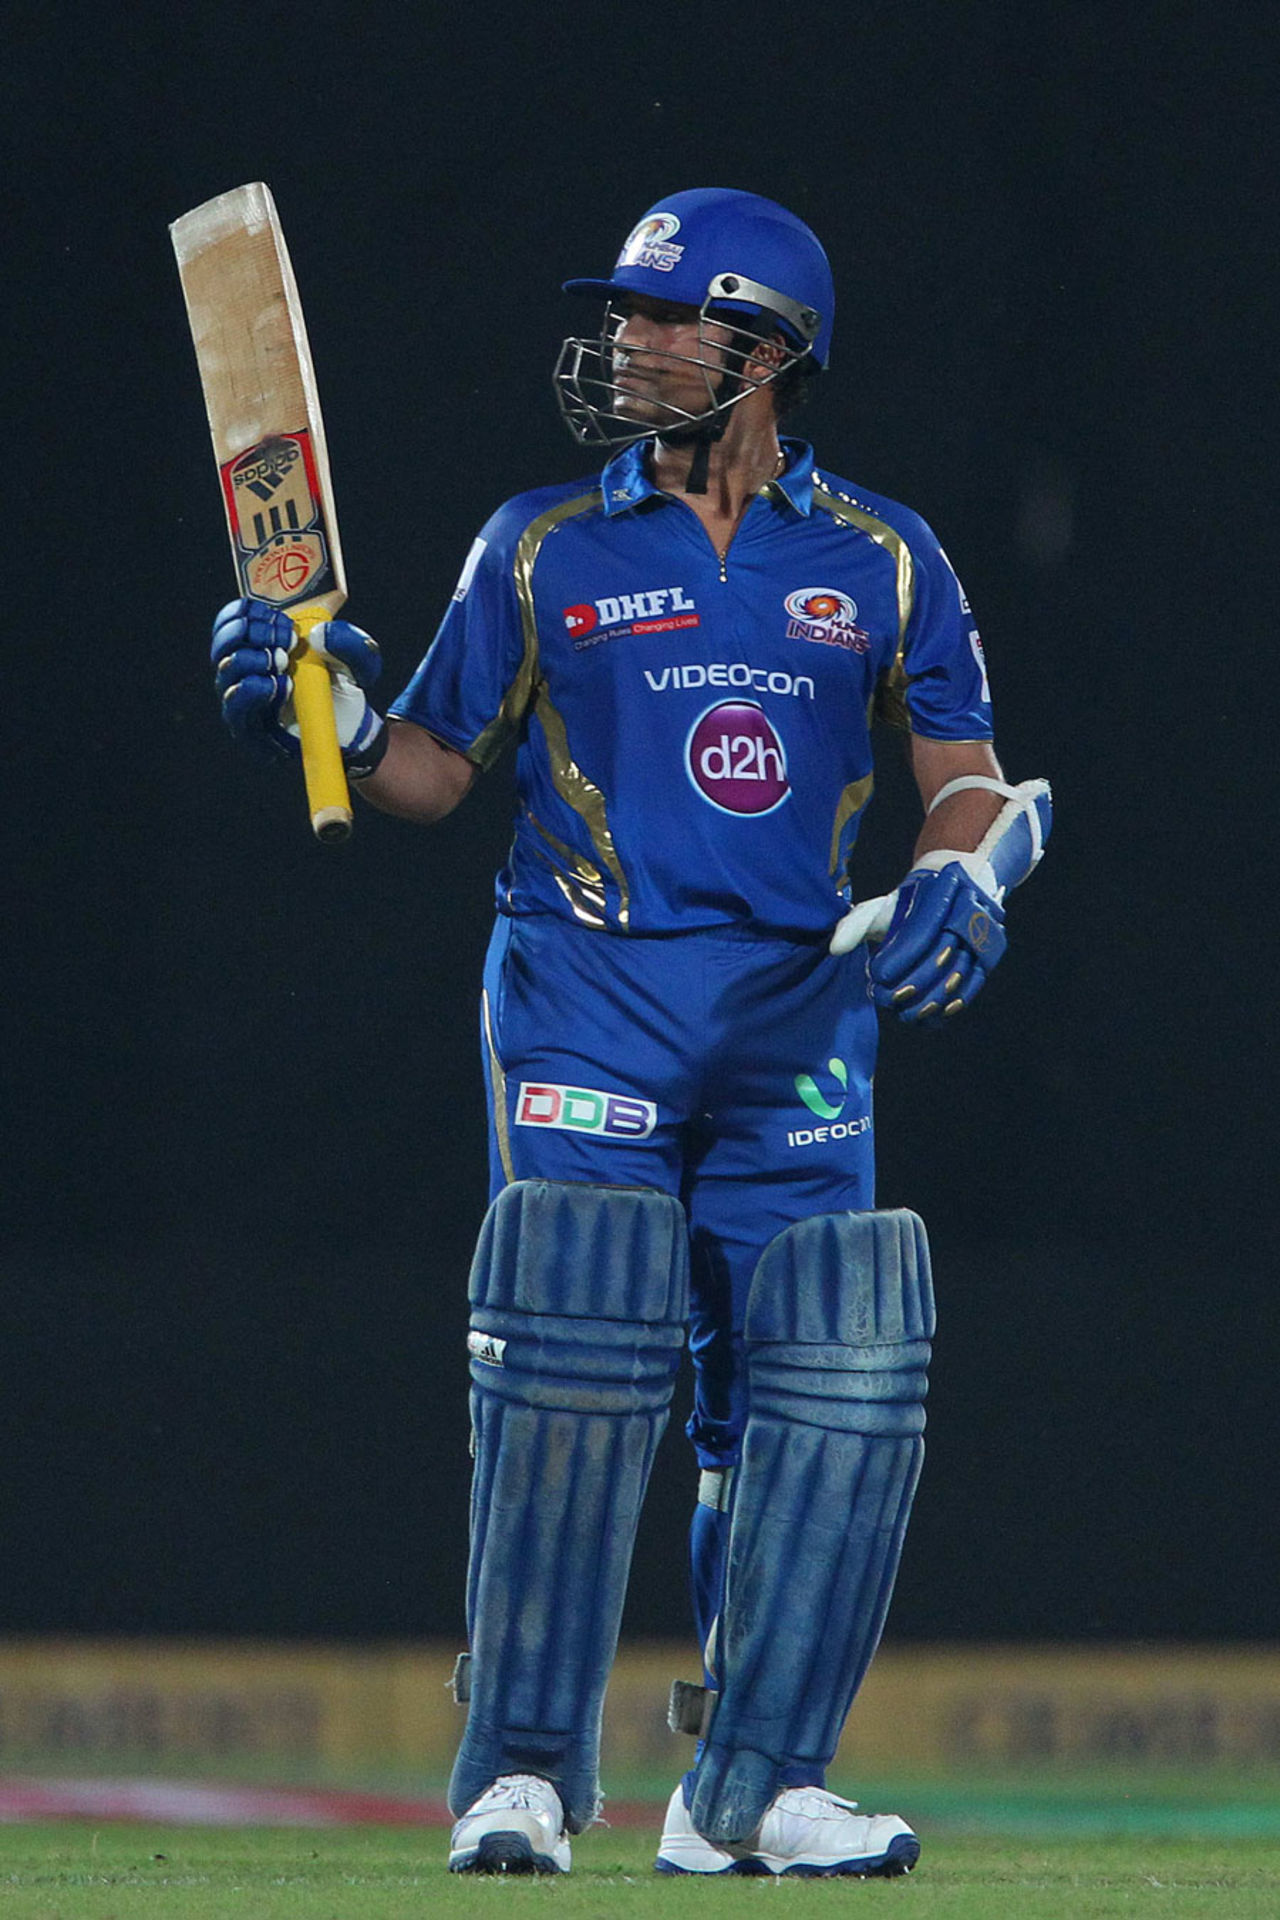 Sachin Tendulkar raises the bat after reaching 50000 career runs, Trinidad & Tobago v Mumbai Indians, Champions League 2013, 2nd Semi-Final, Delhi, October 5, 2013 